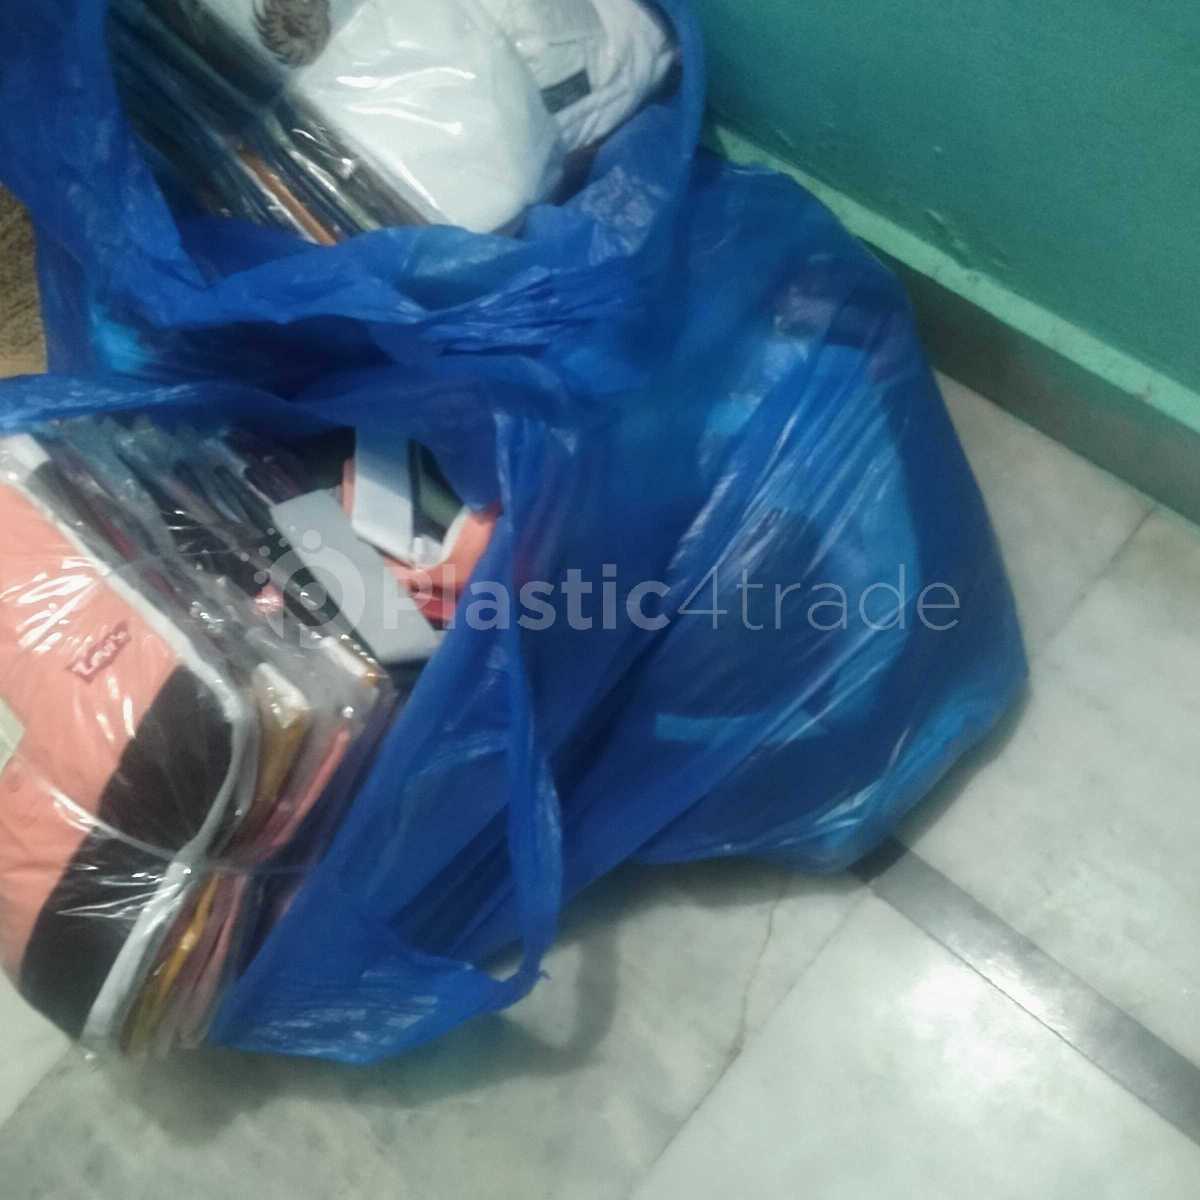 CEMENT BAGS REPROCESSED GRANUALS Plastic Waste Scrap Mix Scrap himachal pradesh india Plastic4trade